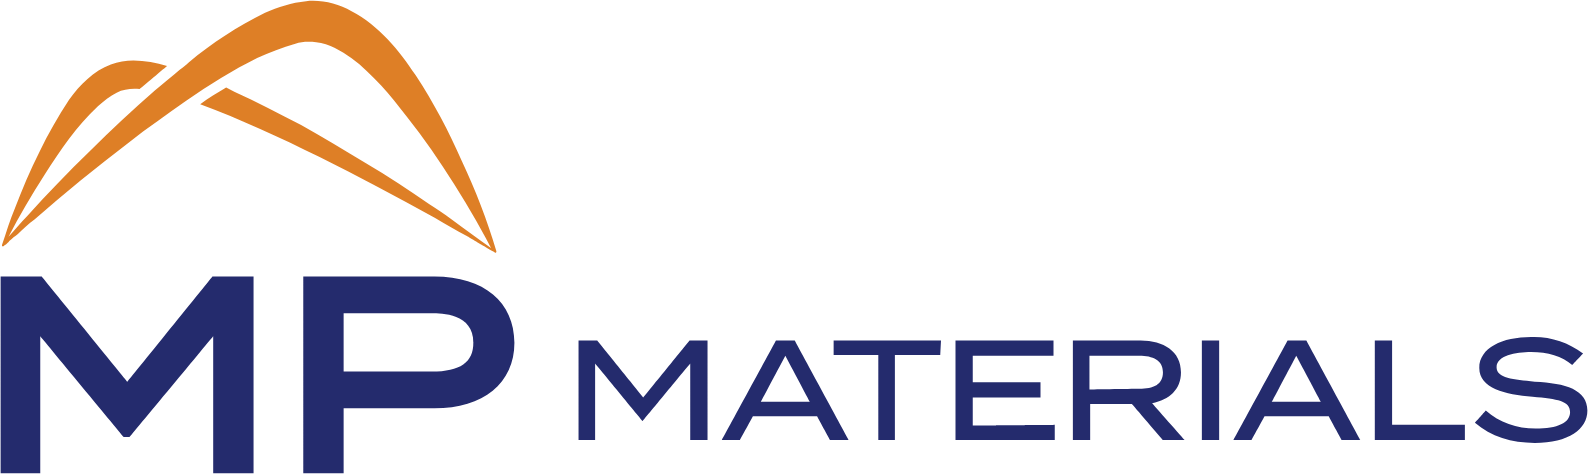 MP Materials logo large (transparent PNG)